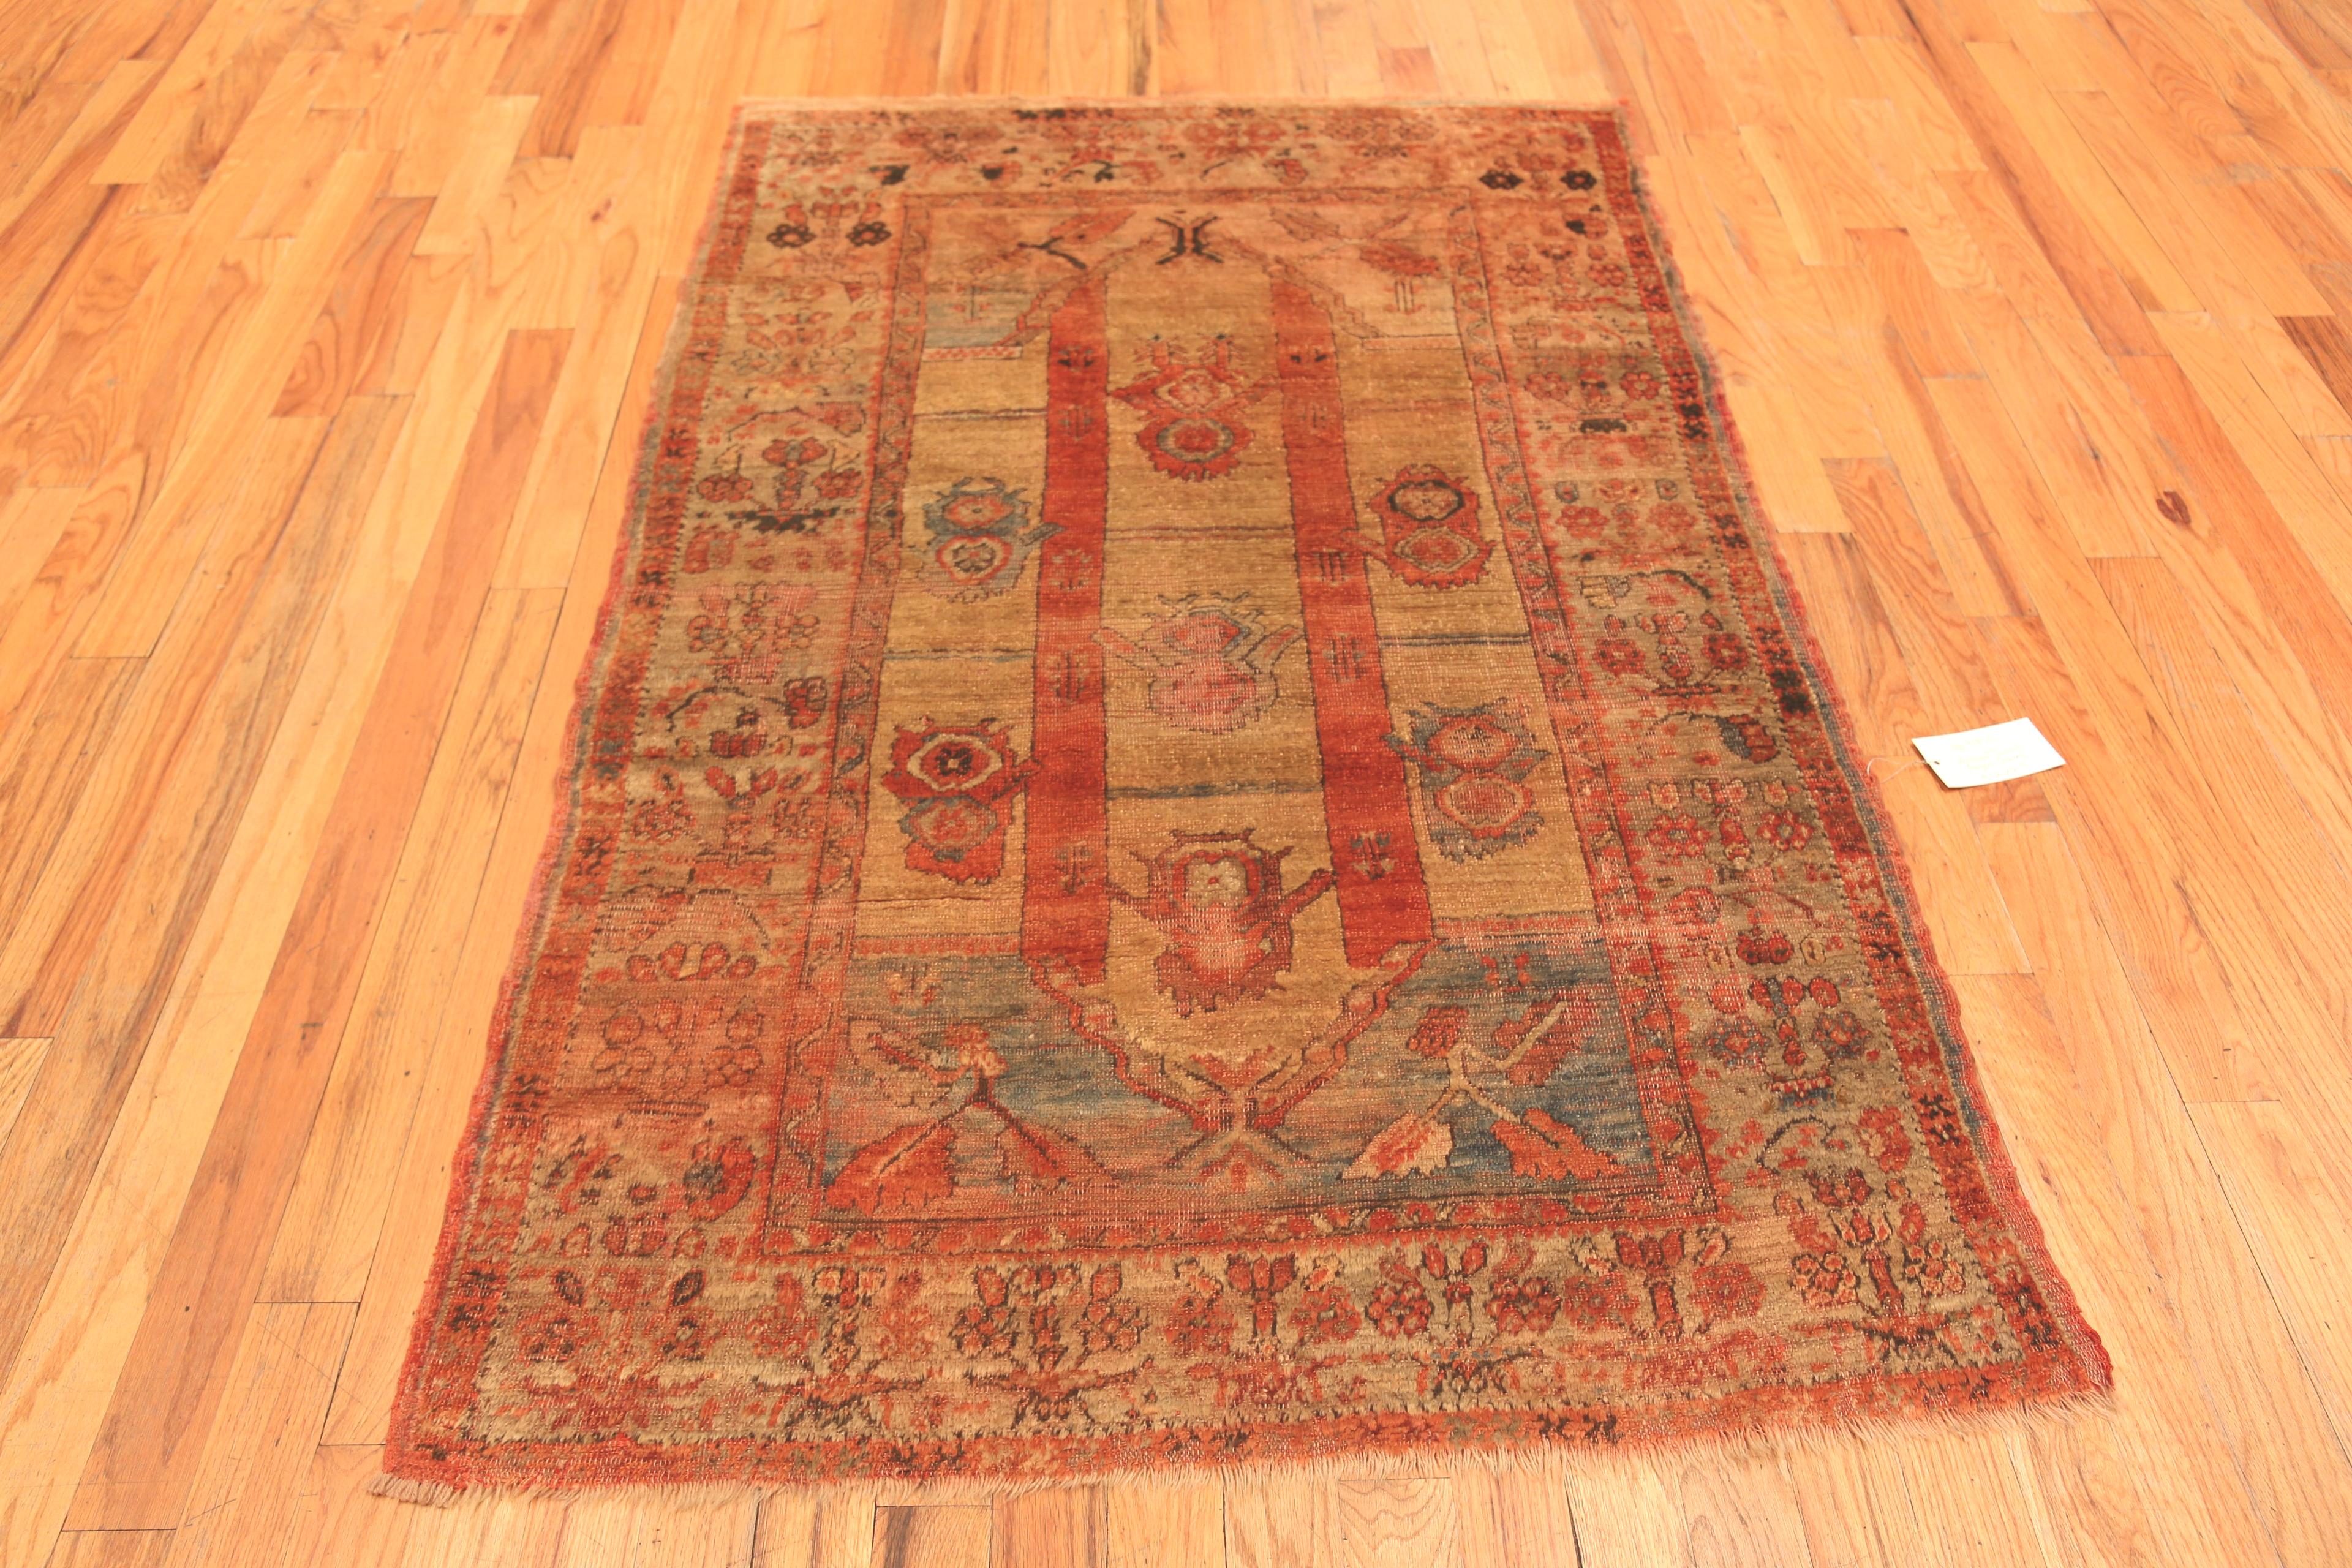 Ancien tapis turc Angora Oushak, Pays d'origine : Tapis turcs, Circa date : 1900. Taille : 4 ft 2 in x 6 ft 9 in (1.27 m x 2.05 m)
 